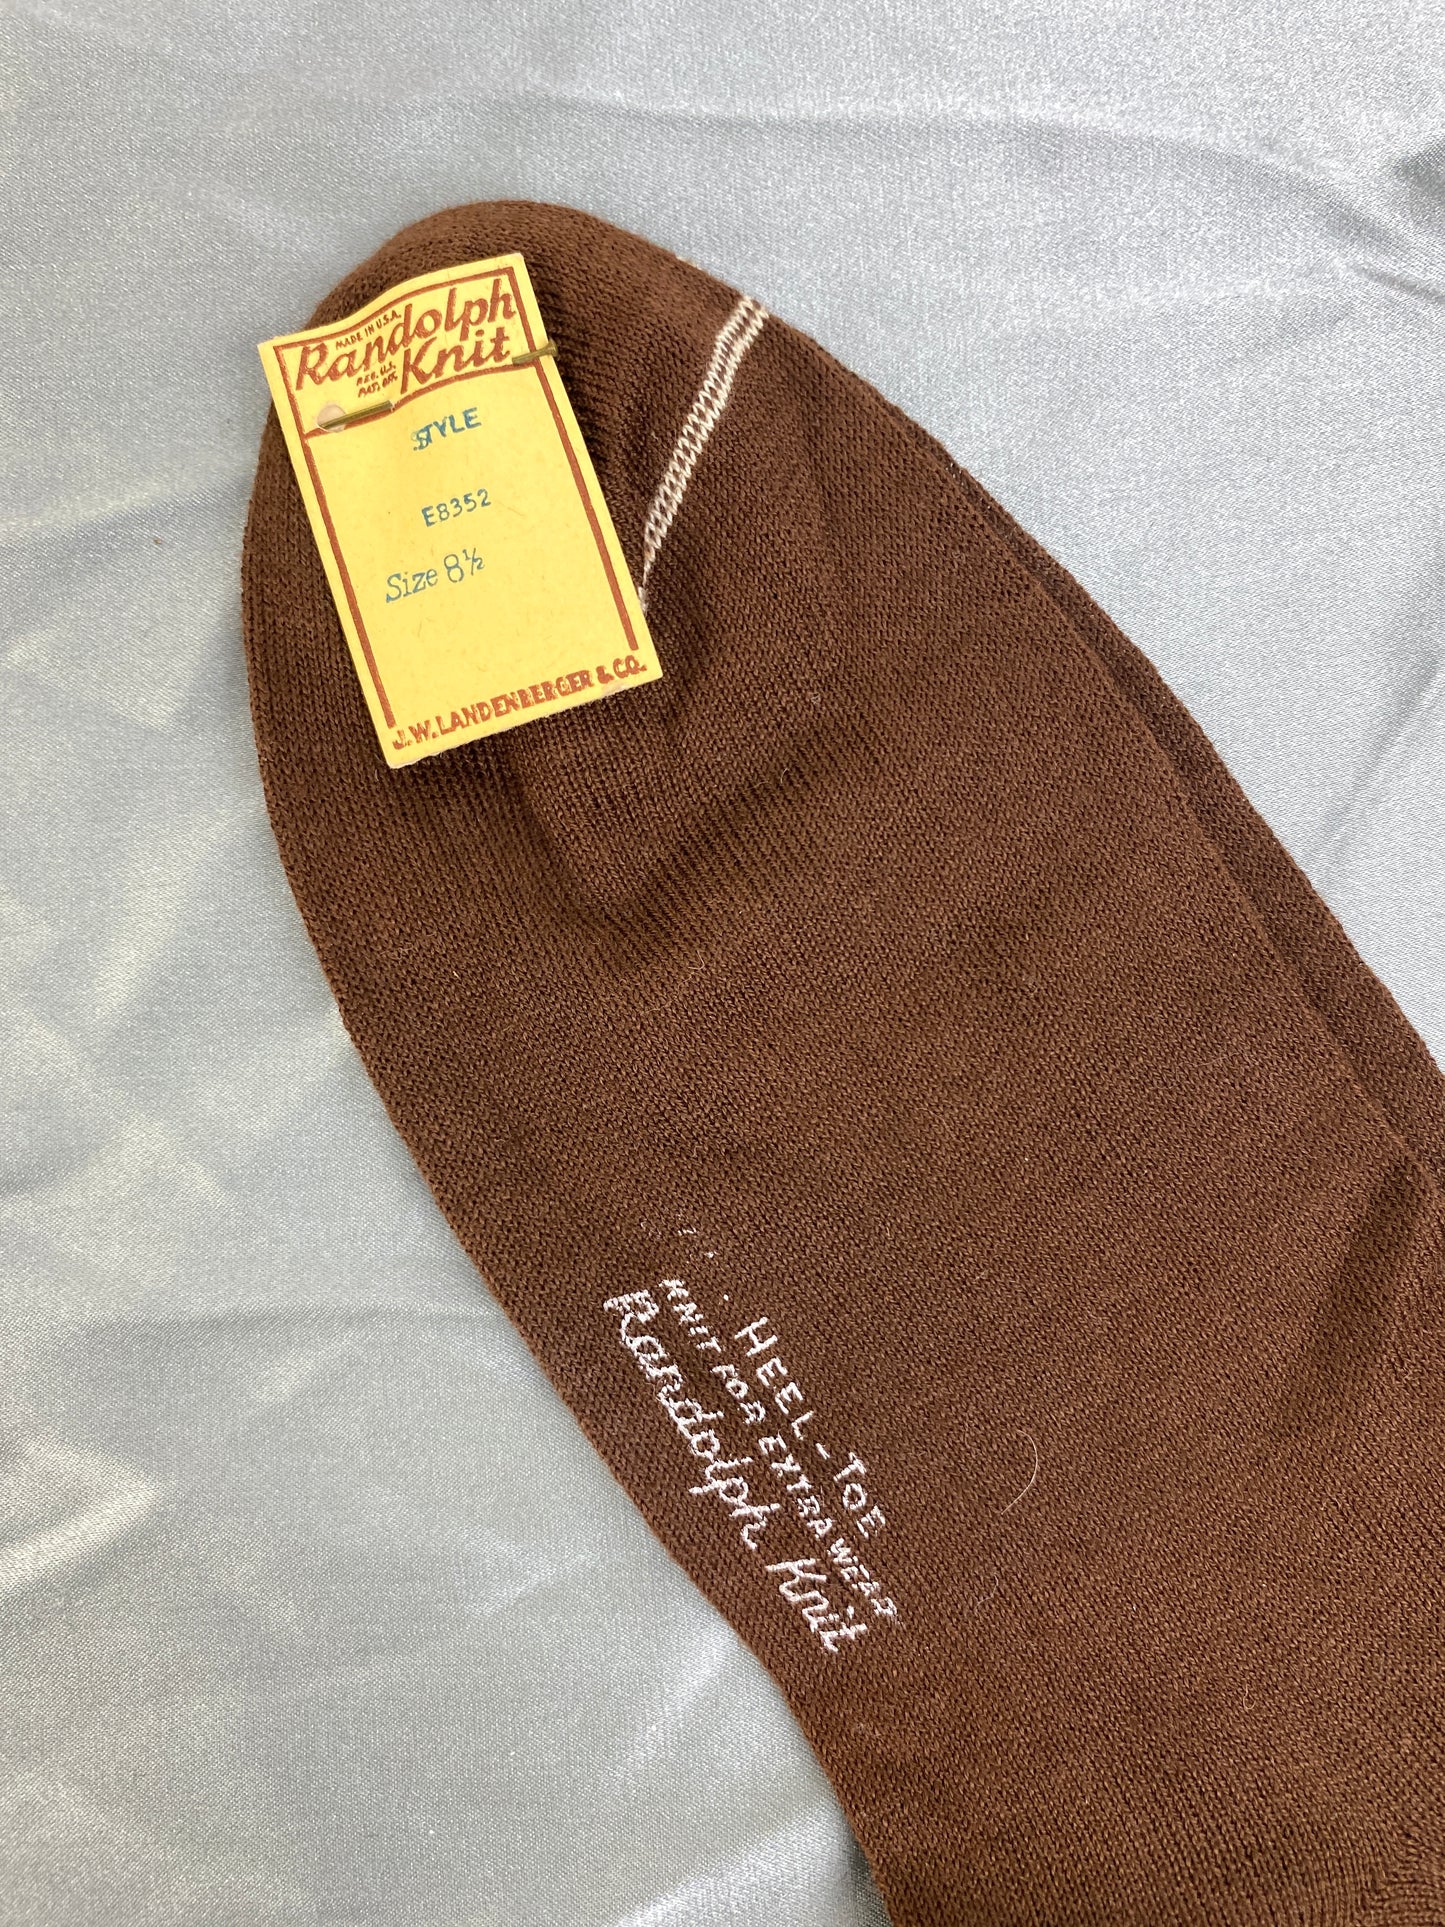 Vintage 1950s/60s Deadstock Brown Cotton Randolph Knit Knee Socks, x5